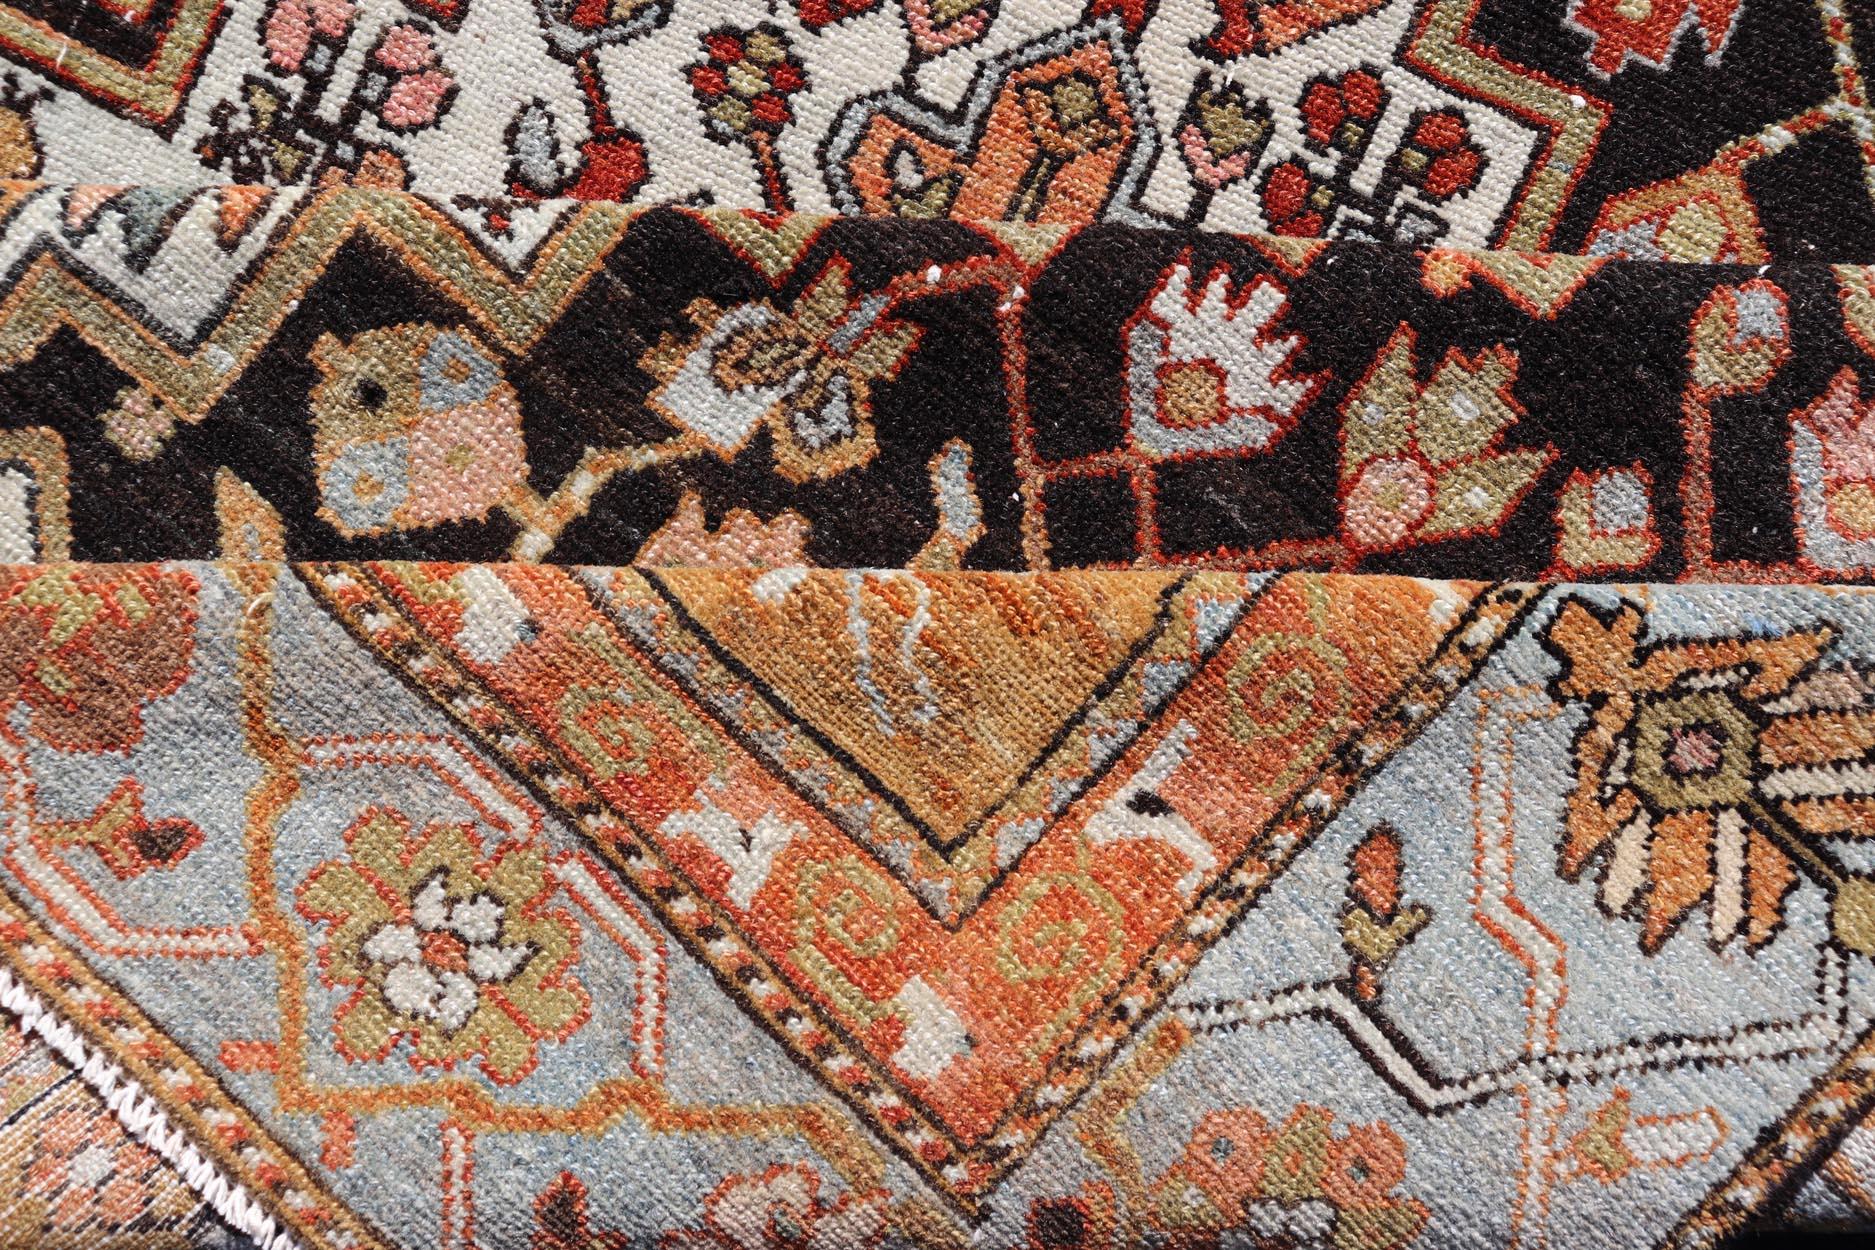 Antique Persian Tribal Design Bakhtiari Rug in Multi Colors By Keivan Woven Arts For Sale 6